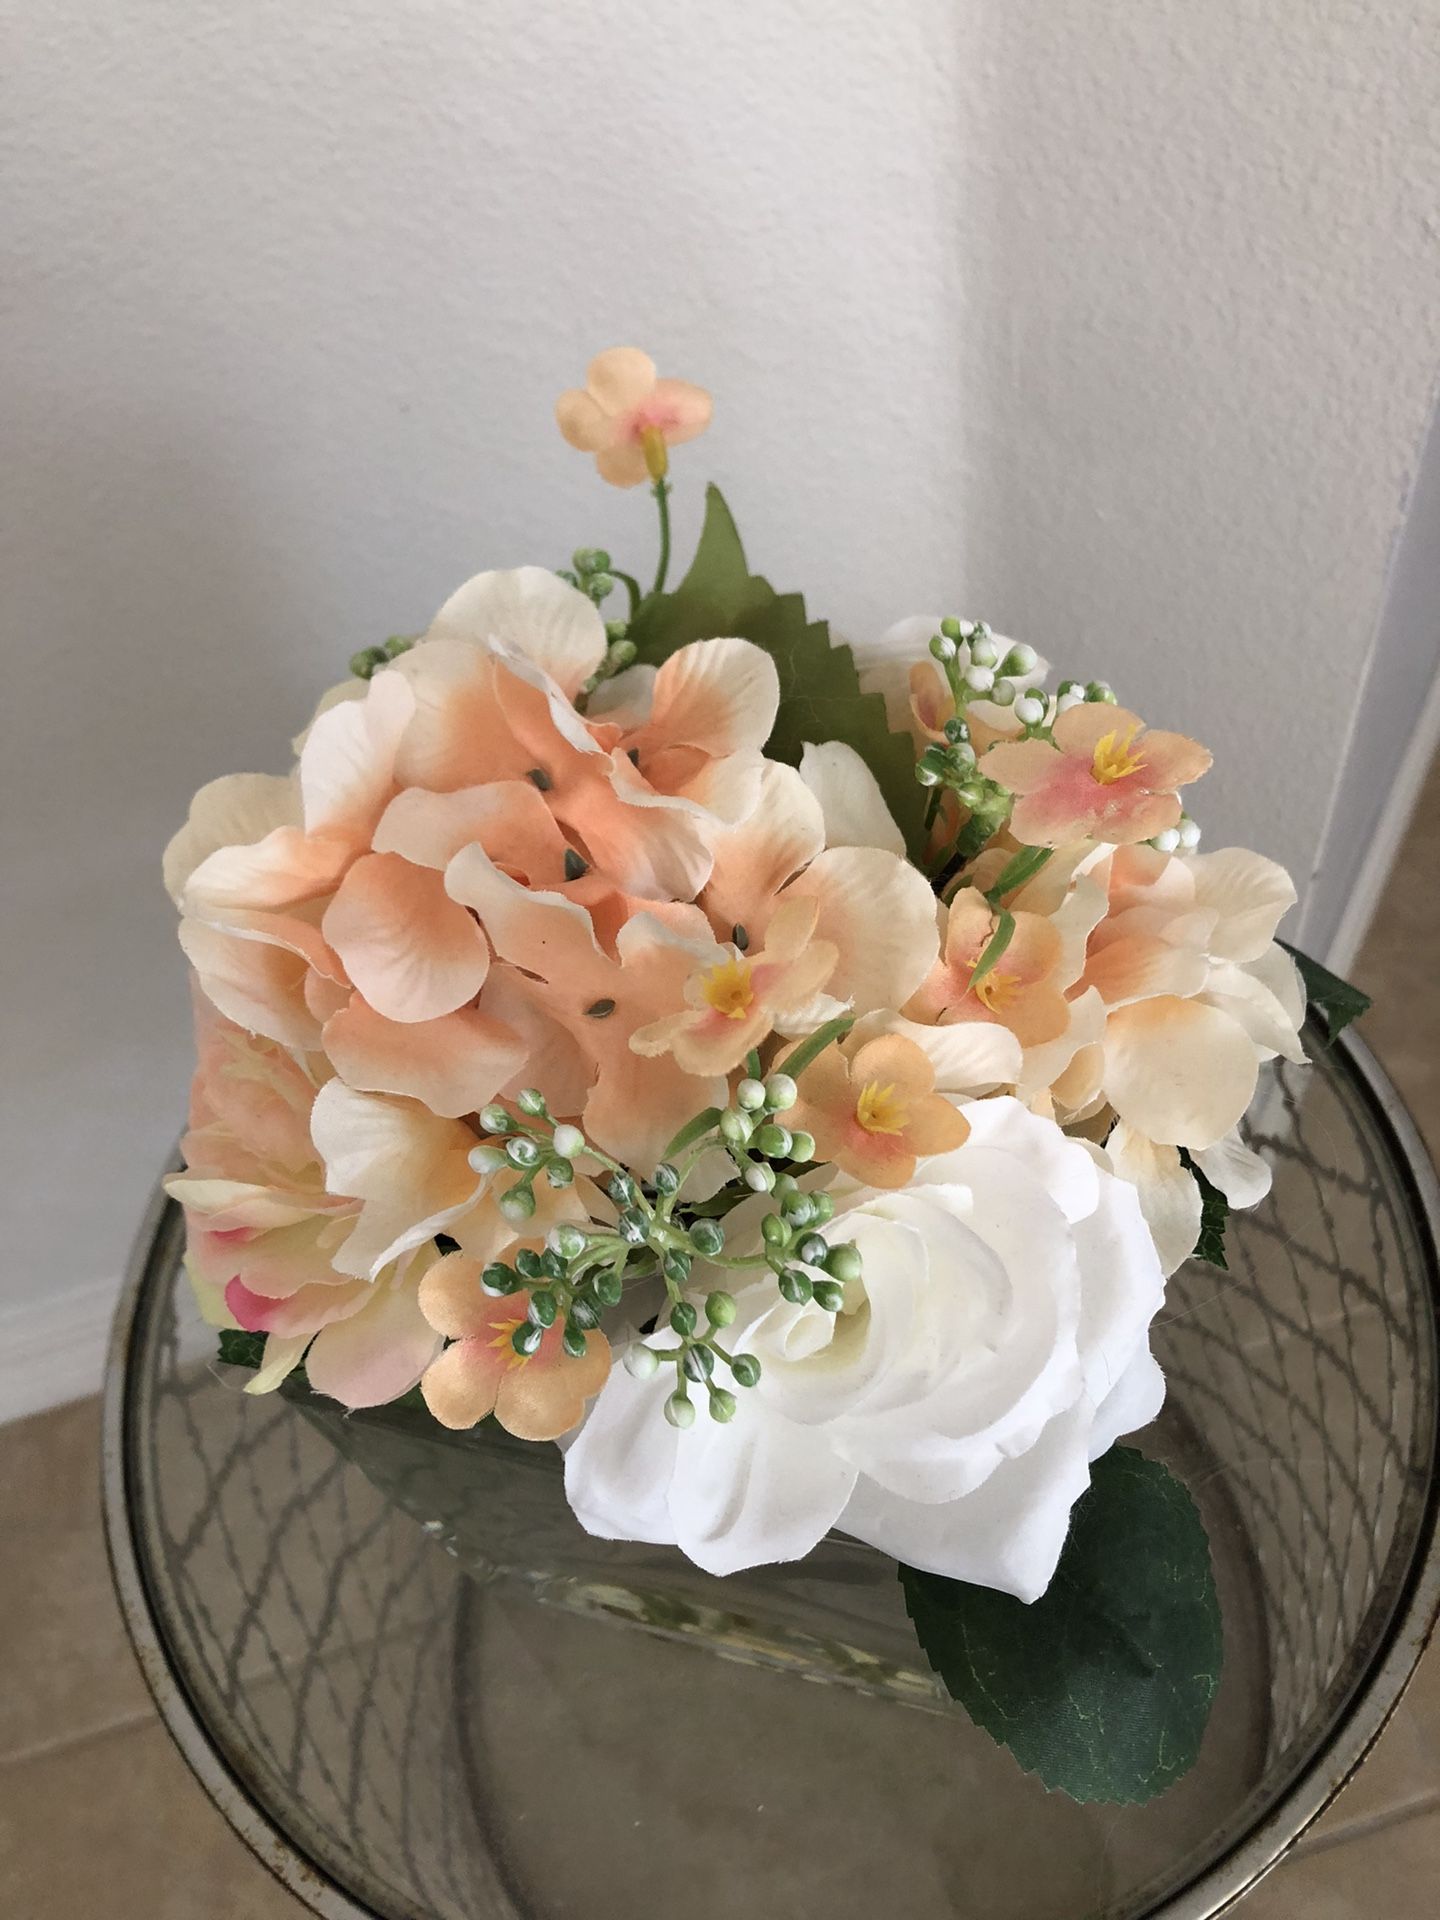 Decorative Vase With Fabric Flowers 